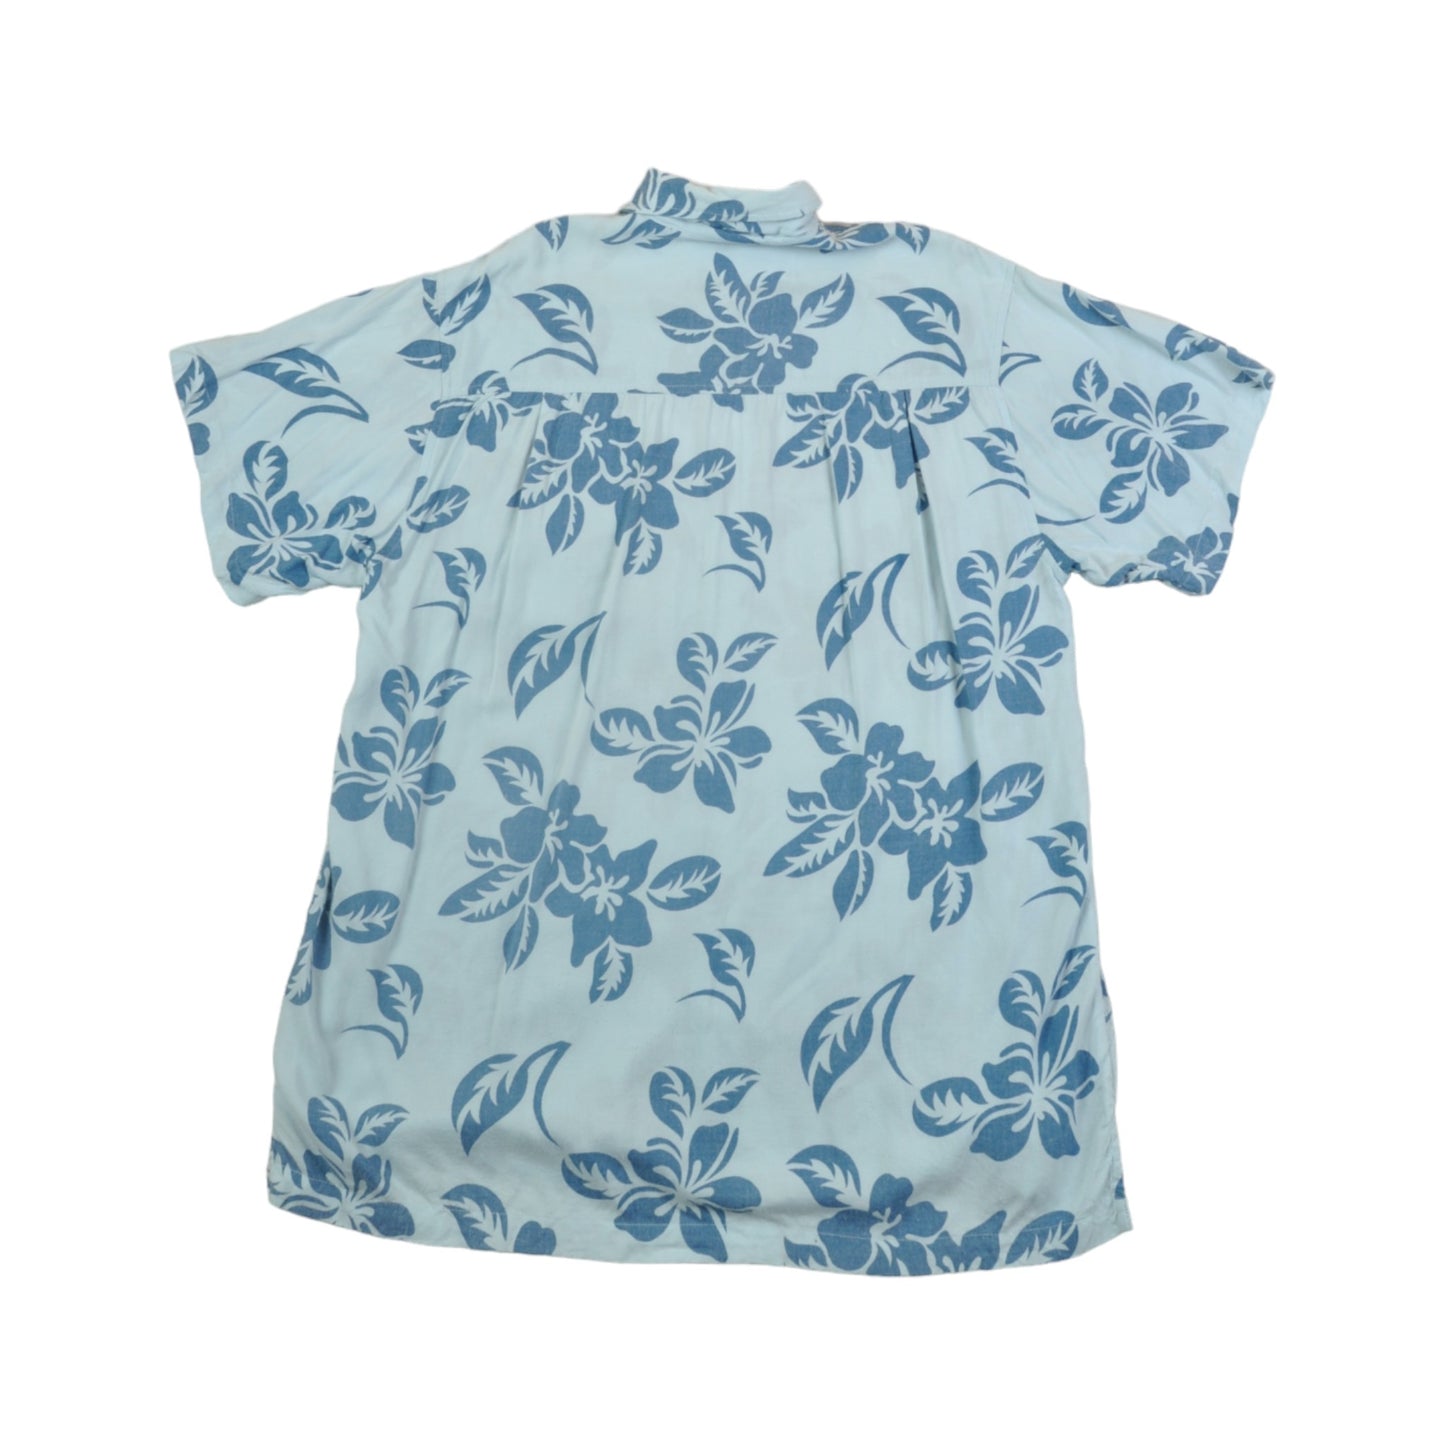 Vintage Retro Patterned Surf Shirt Short Sleeved Blue Small